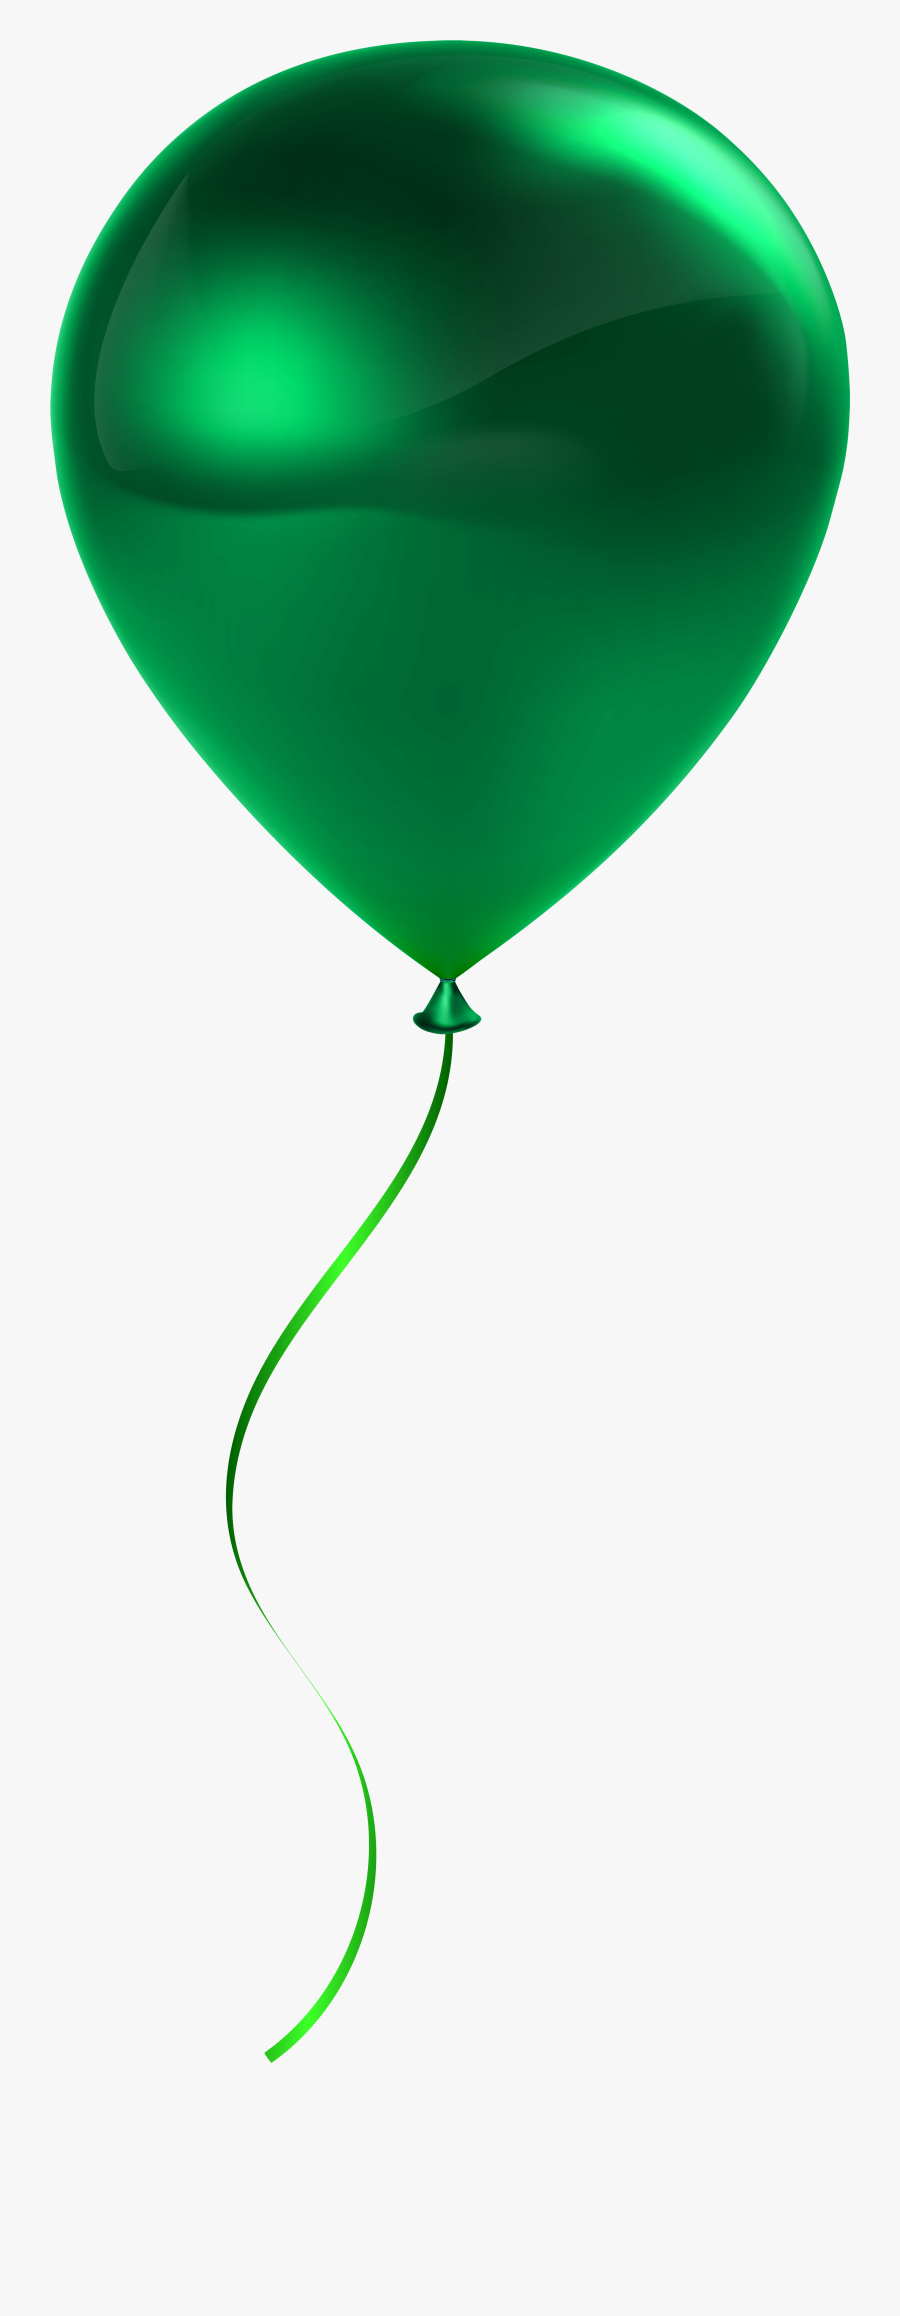 Single Green Balloon Transparent Clip Artu200b Gallery - Green Balloon Clipart Transparent, Transparent Clipart